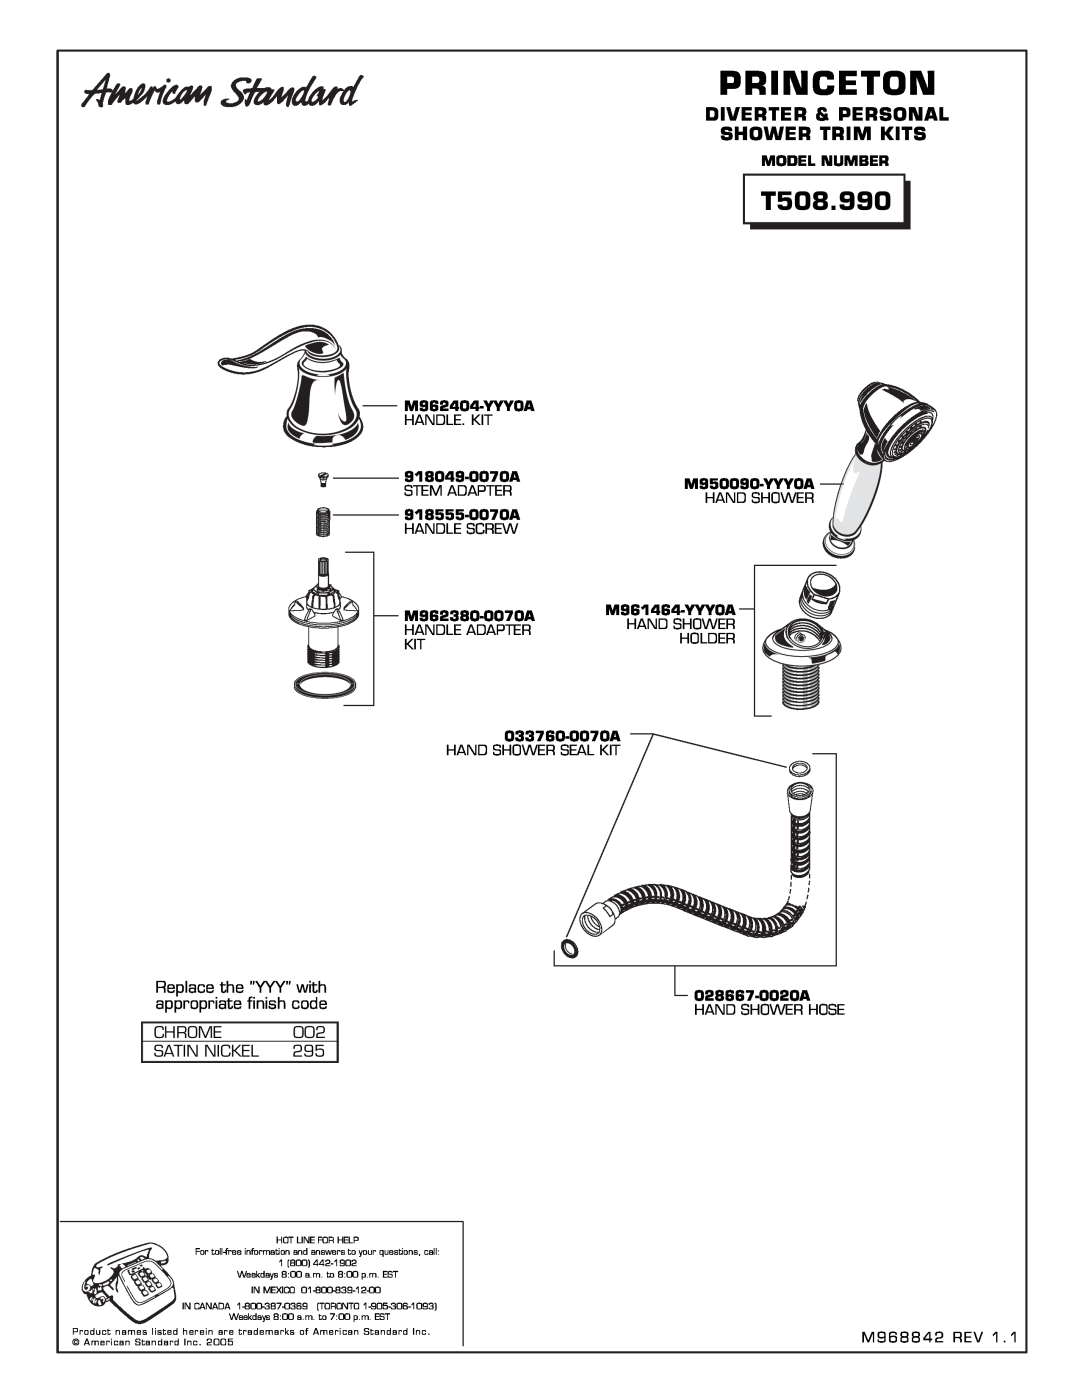 American Standard T508.900 manual Princeton, T508.990, Diverter & Personal Shower Trim Kits, Chrome, Satin Nickel 